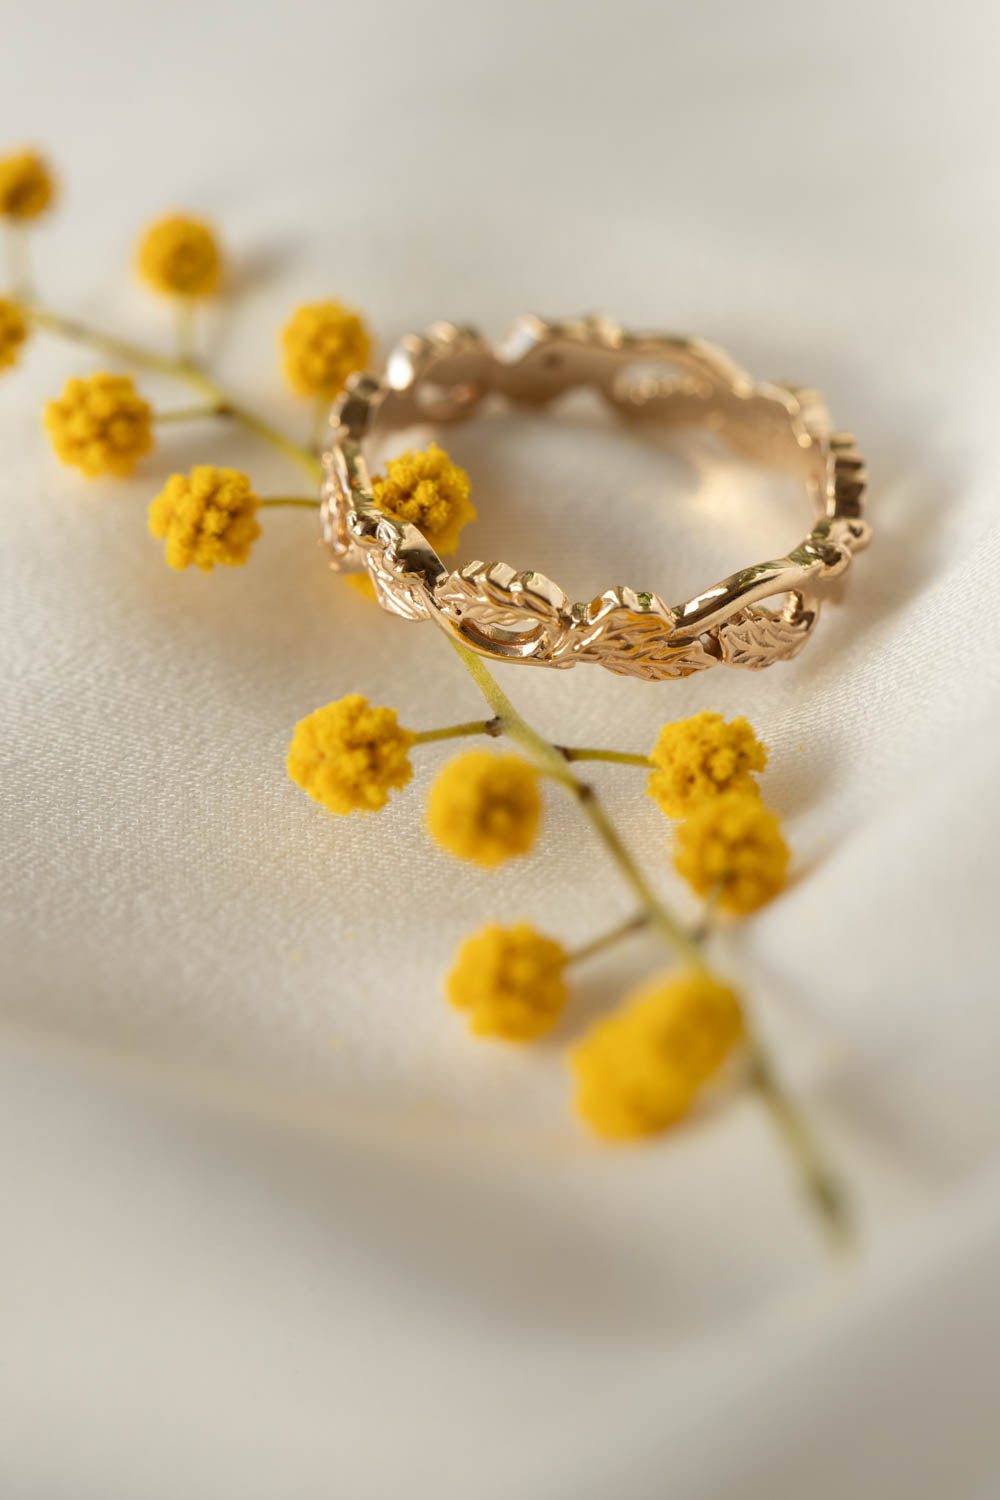 Oak leaves gold wedding band, comfort fit unisex wedding band 4 mm - Eden Garden Jewelry™